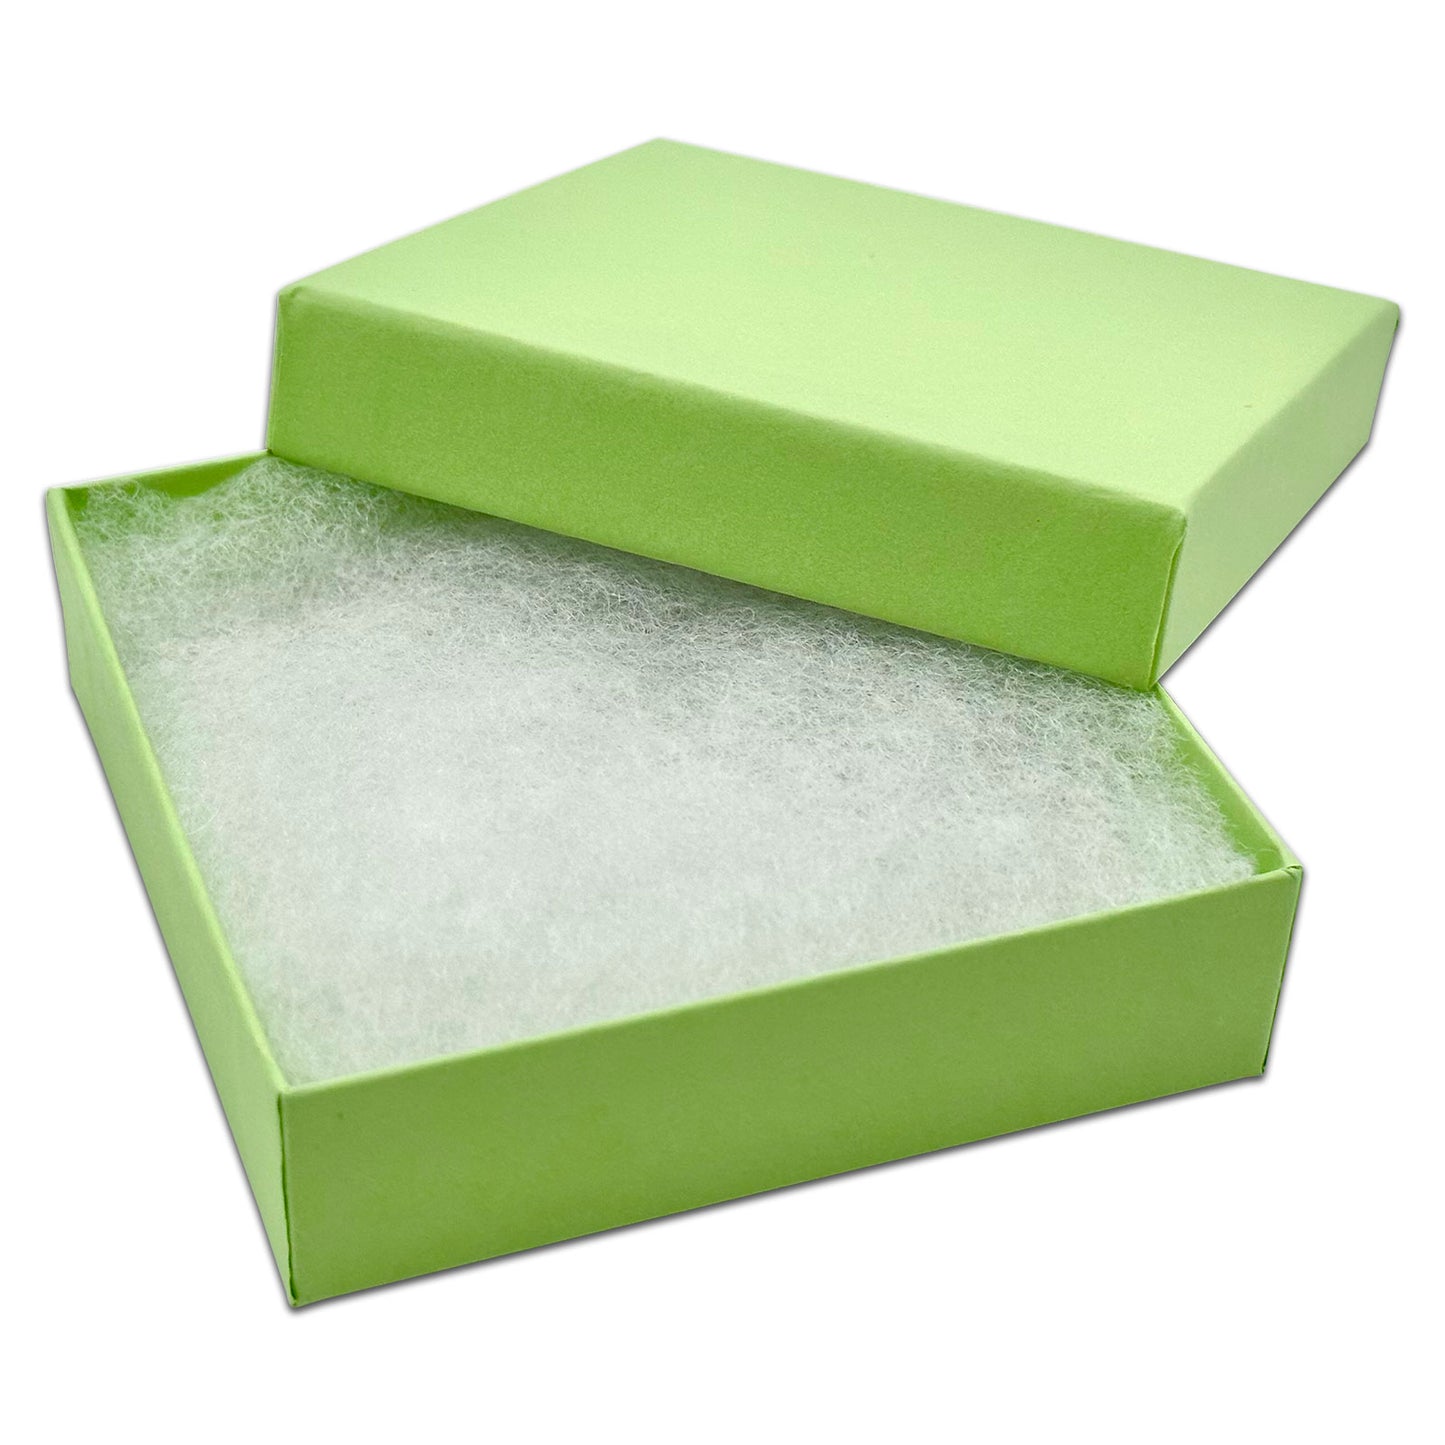 3 1/2" x 3 1/2" x 1" Mint Green Cotton Filled Paper Box (25-Pack)